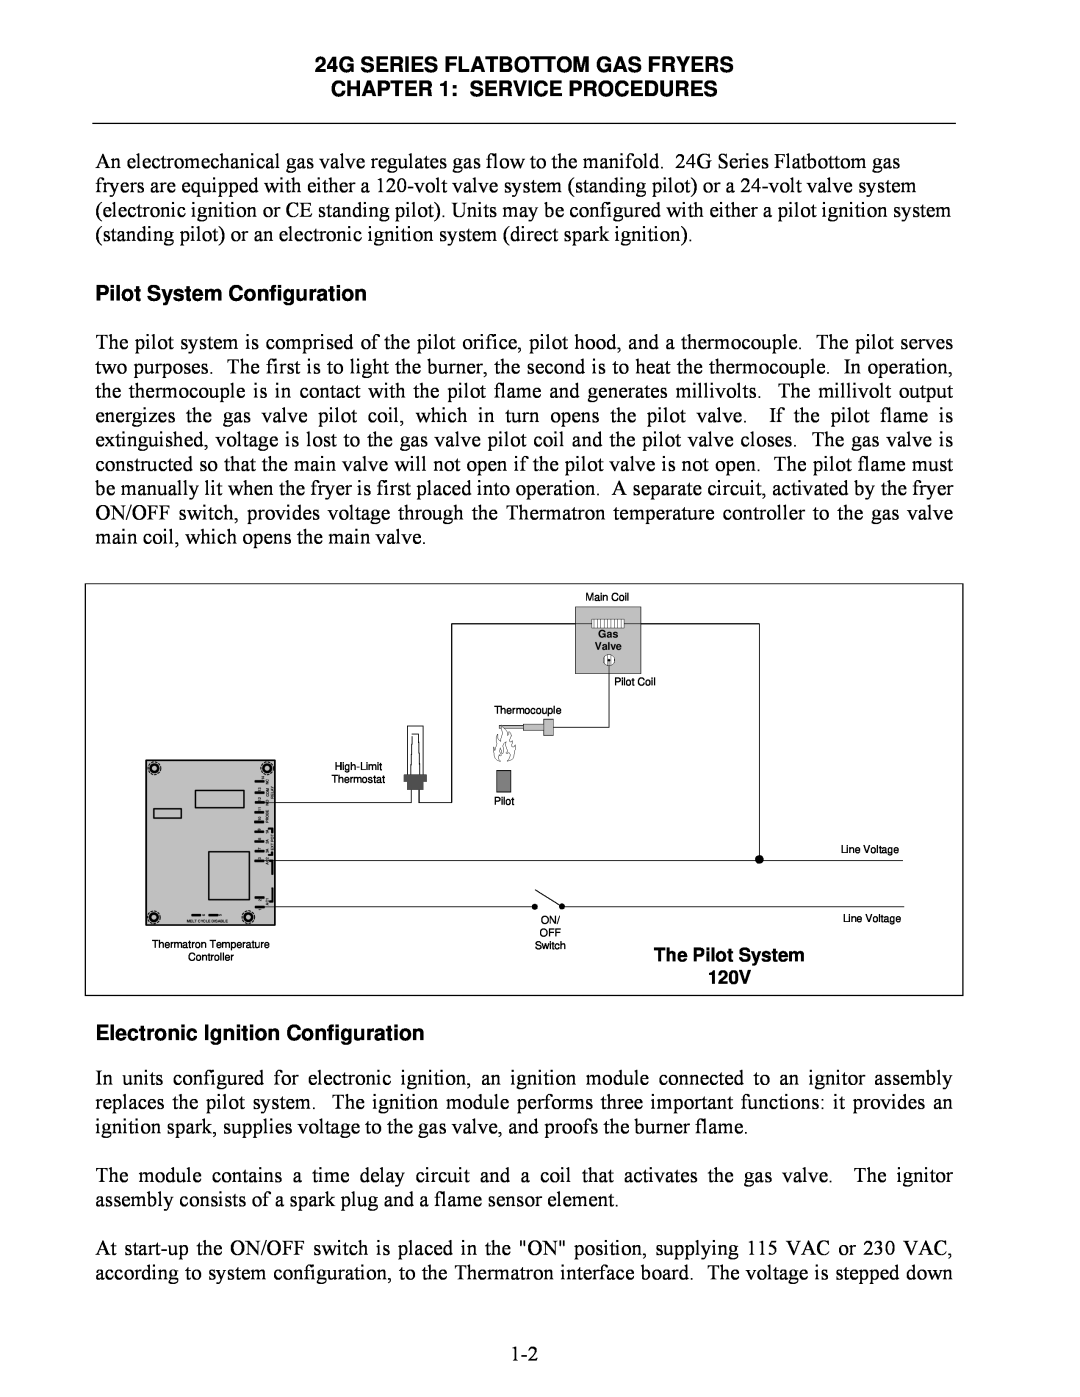 Frymaster 1824G, 2424G manual Pilot System Configuration, Electronic Ignition Configuration 